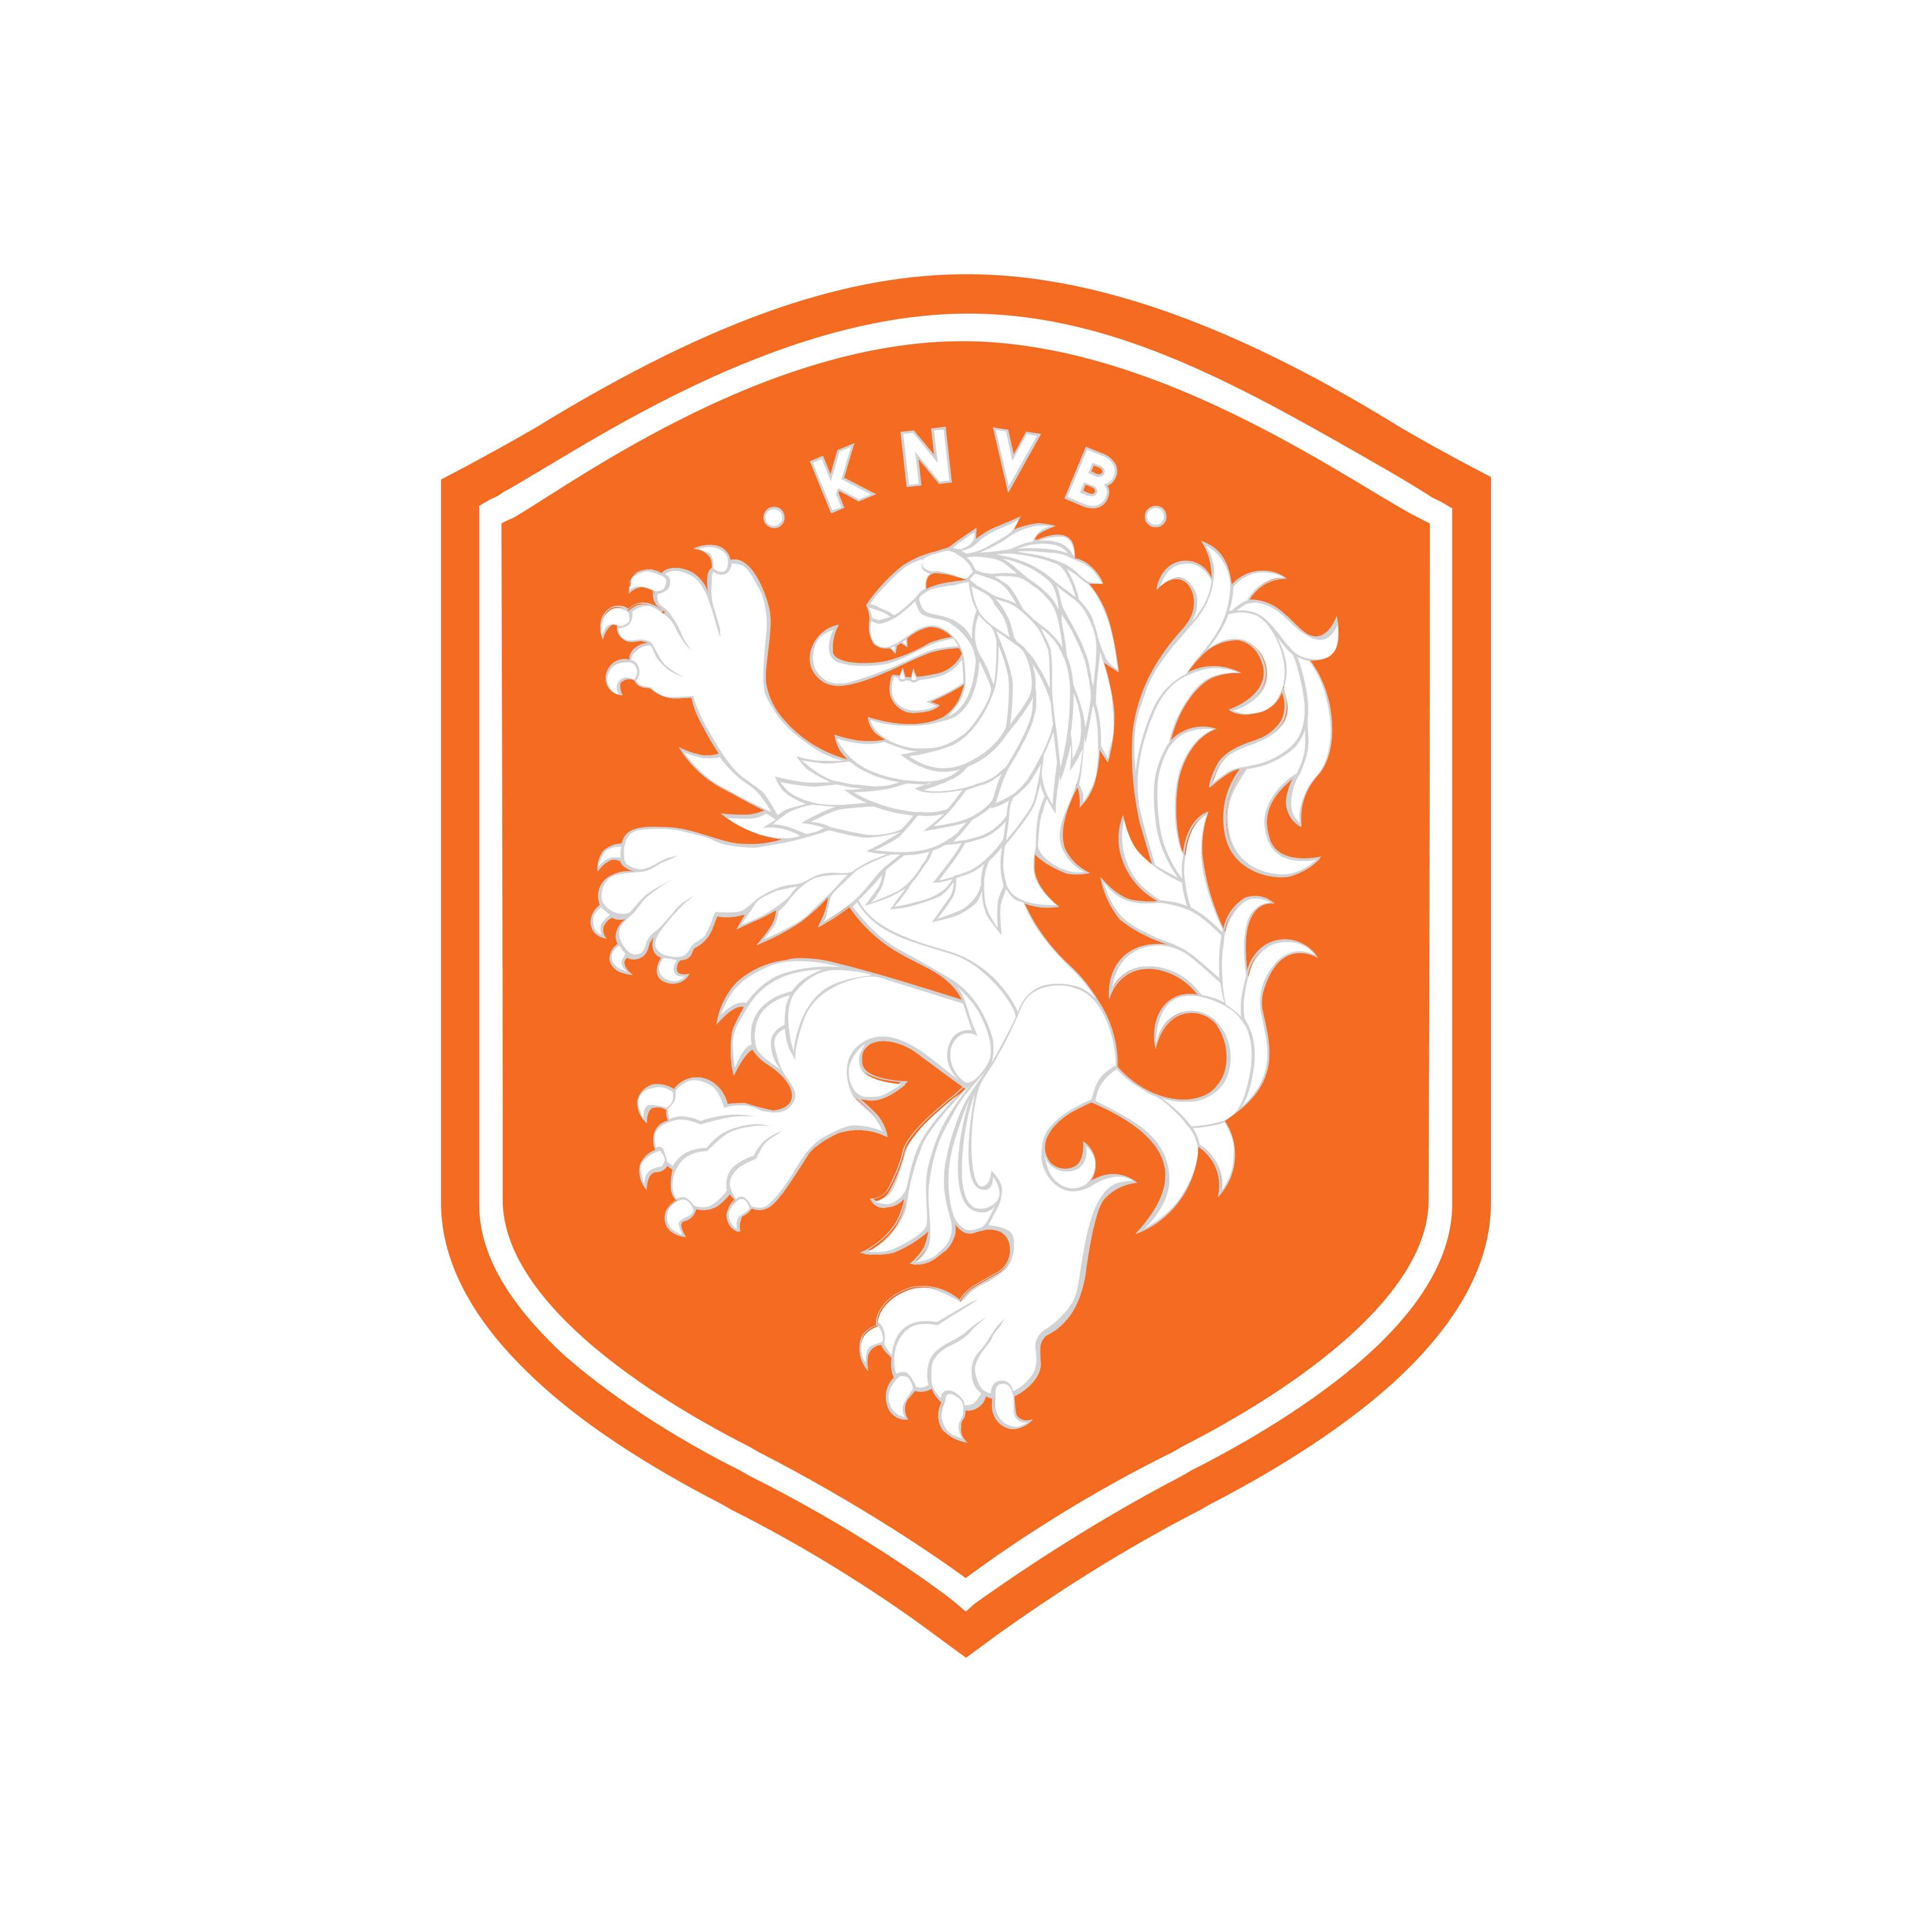 holanda netherlands football team logo 0 - KNVB - Netherlands National Football Team Logo